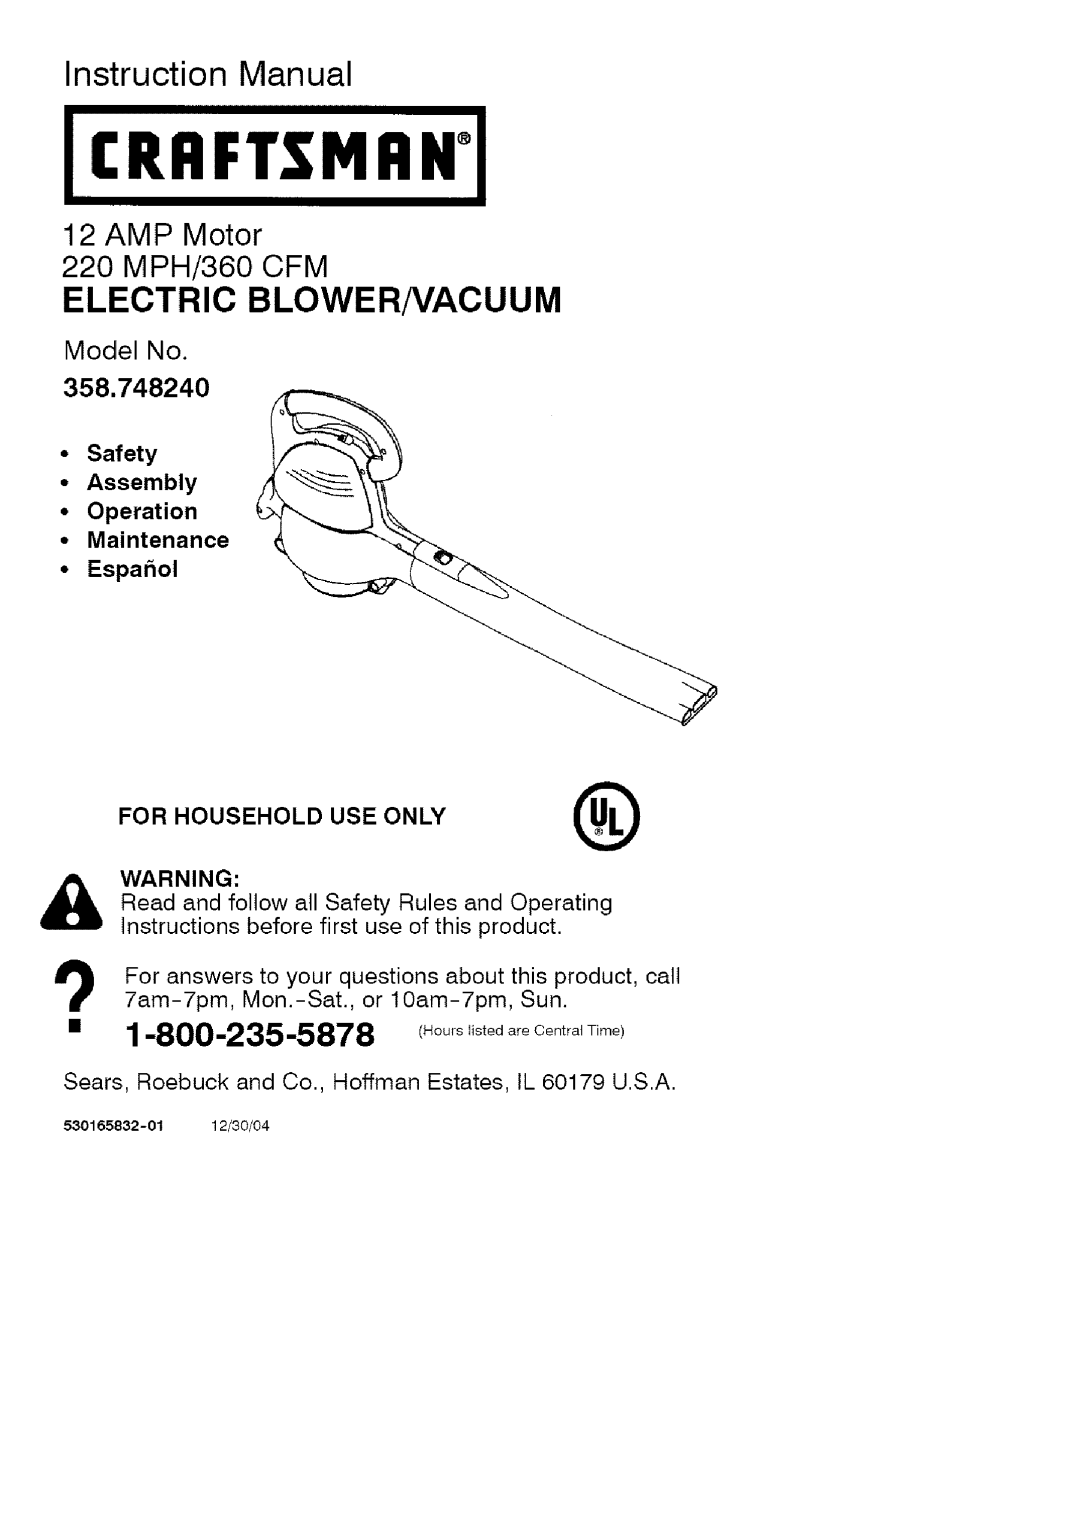 Craftsman instruction manual JCRRFT$1VlRNI, Electric Blowernacuum, Model No, 358.748240, Safety Assembly 